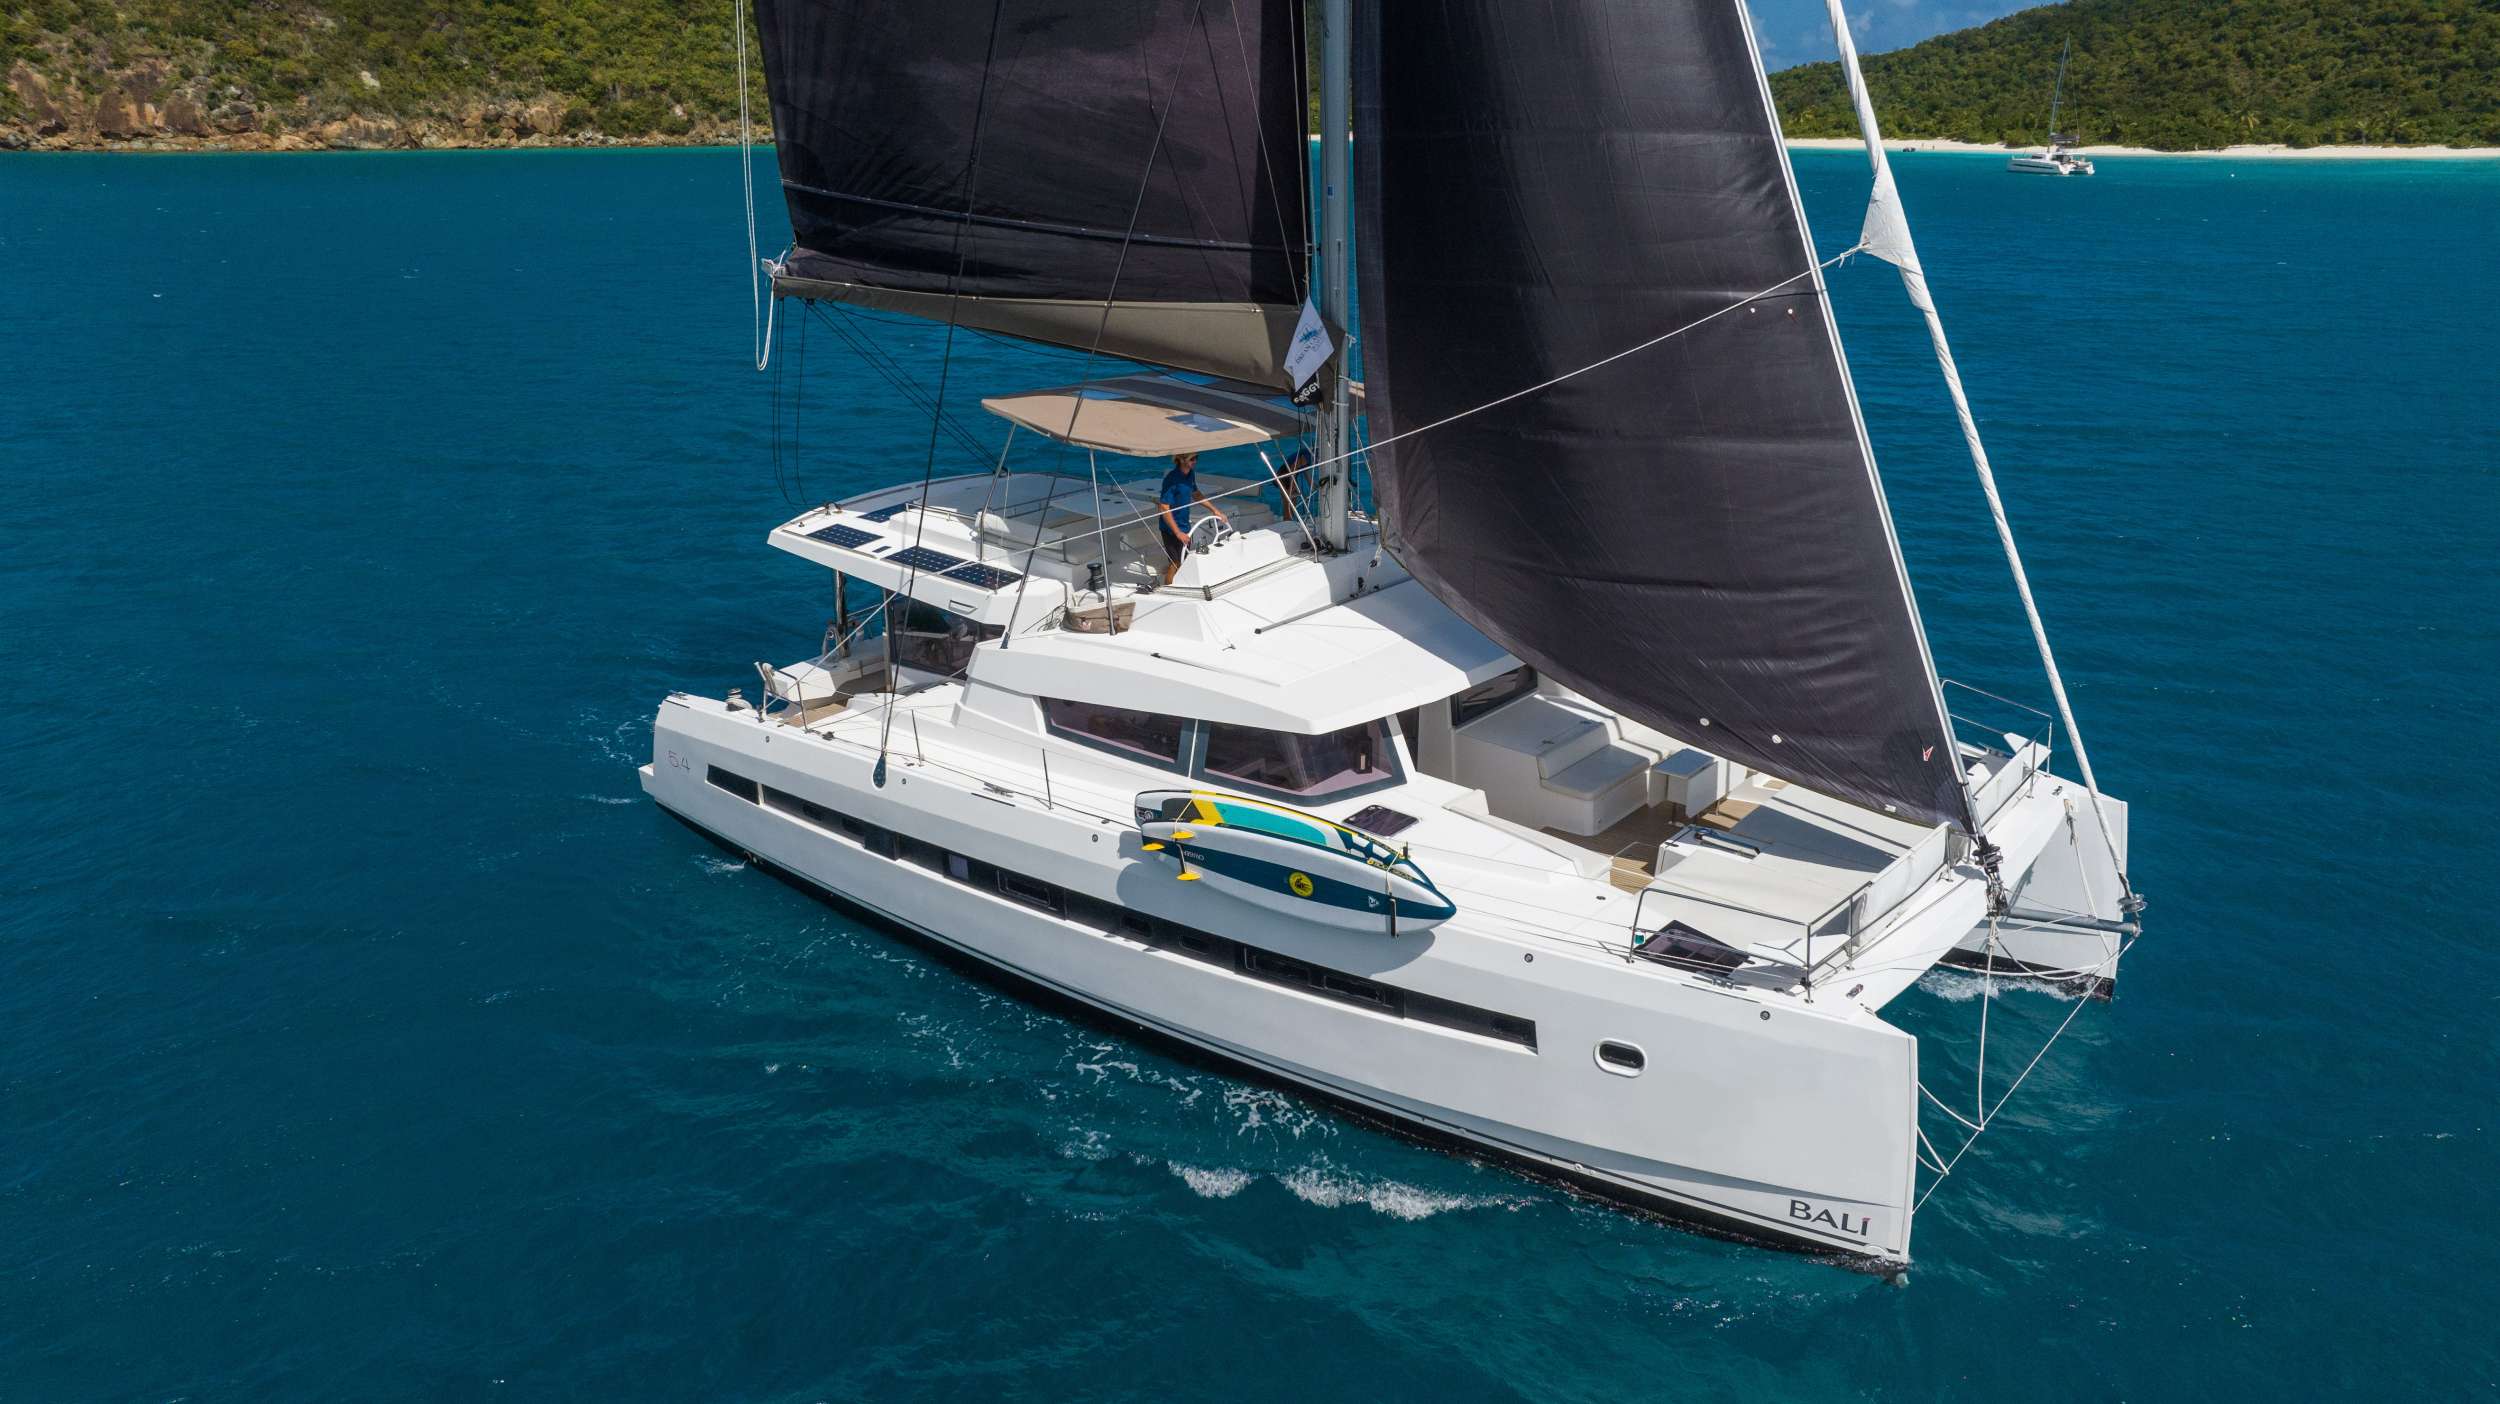 SUN DAZE 5.4 - Luxury yacht charter St Martin & Boat hire in Caribbean 1